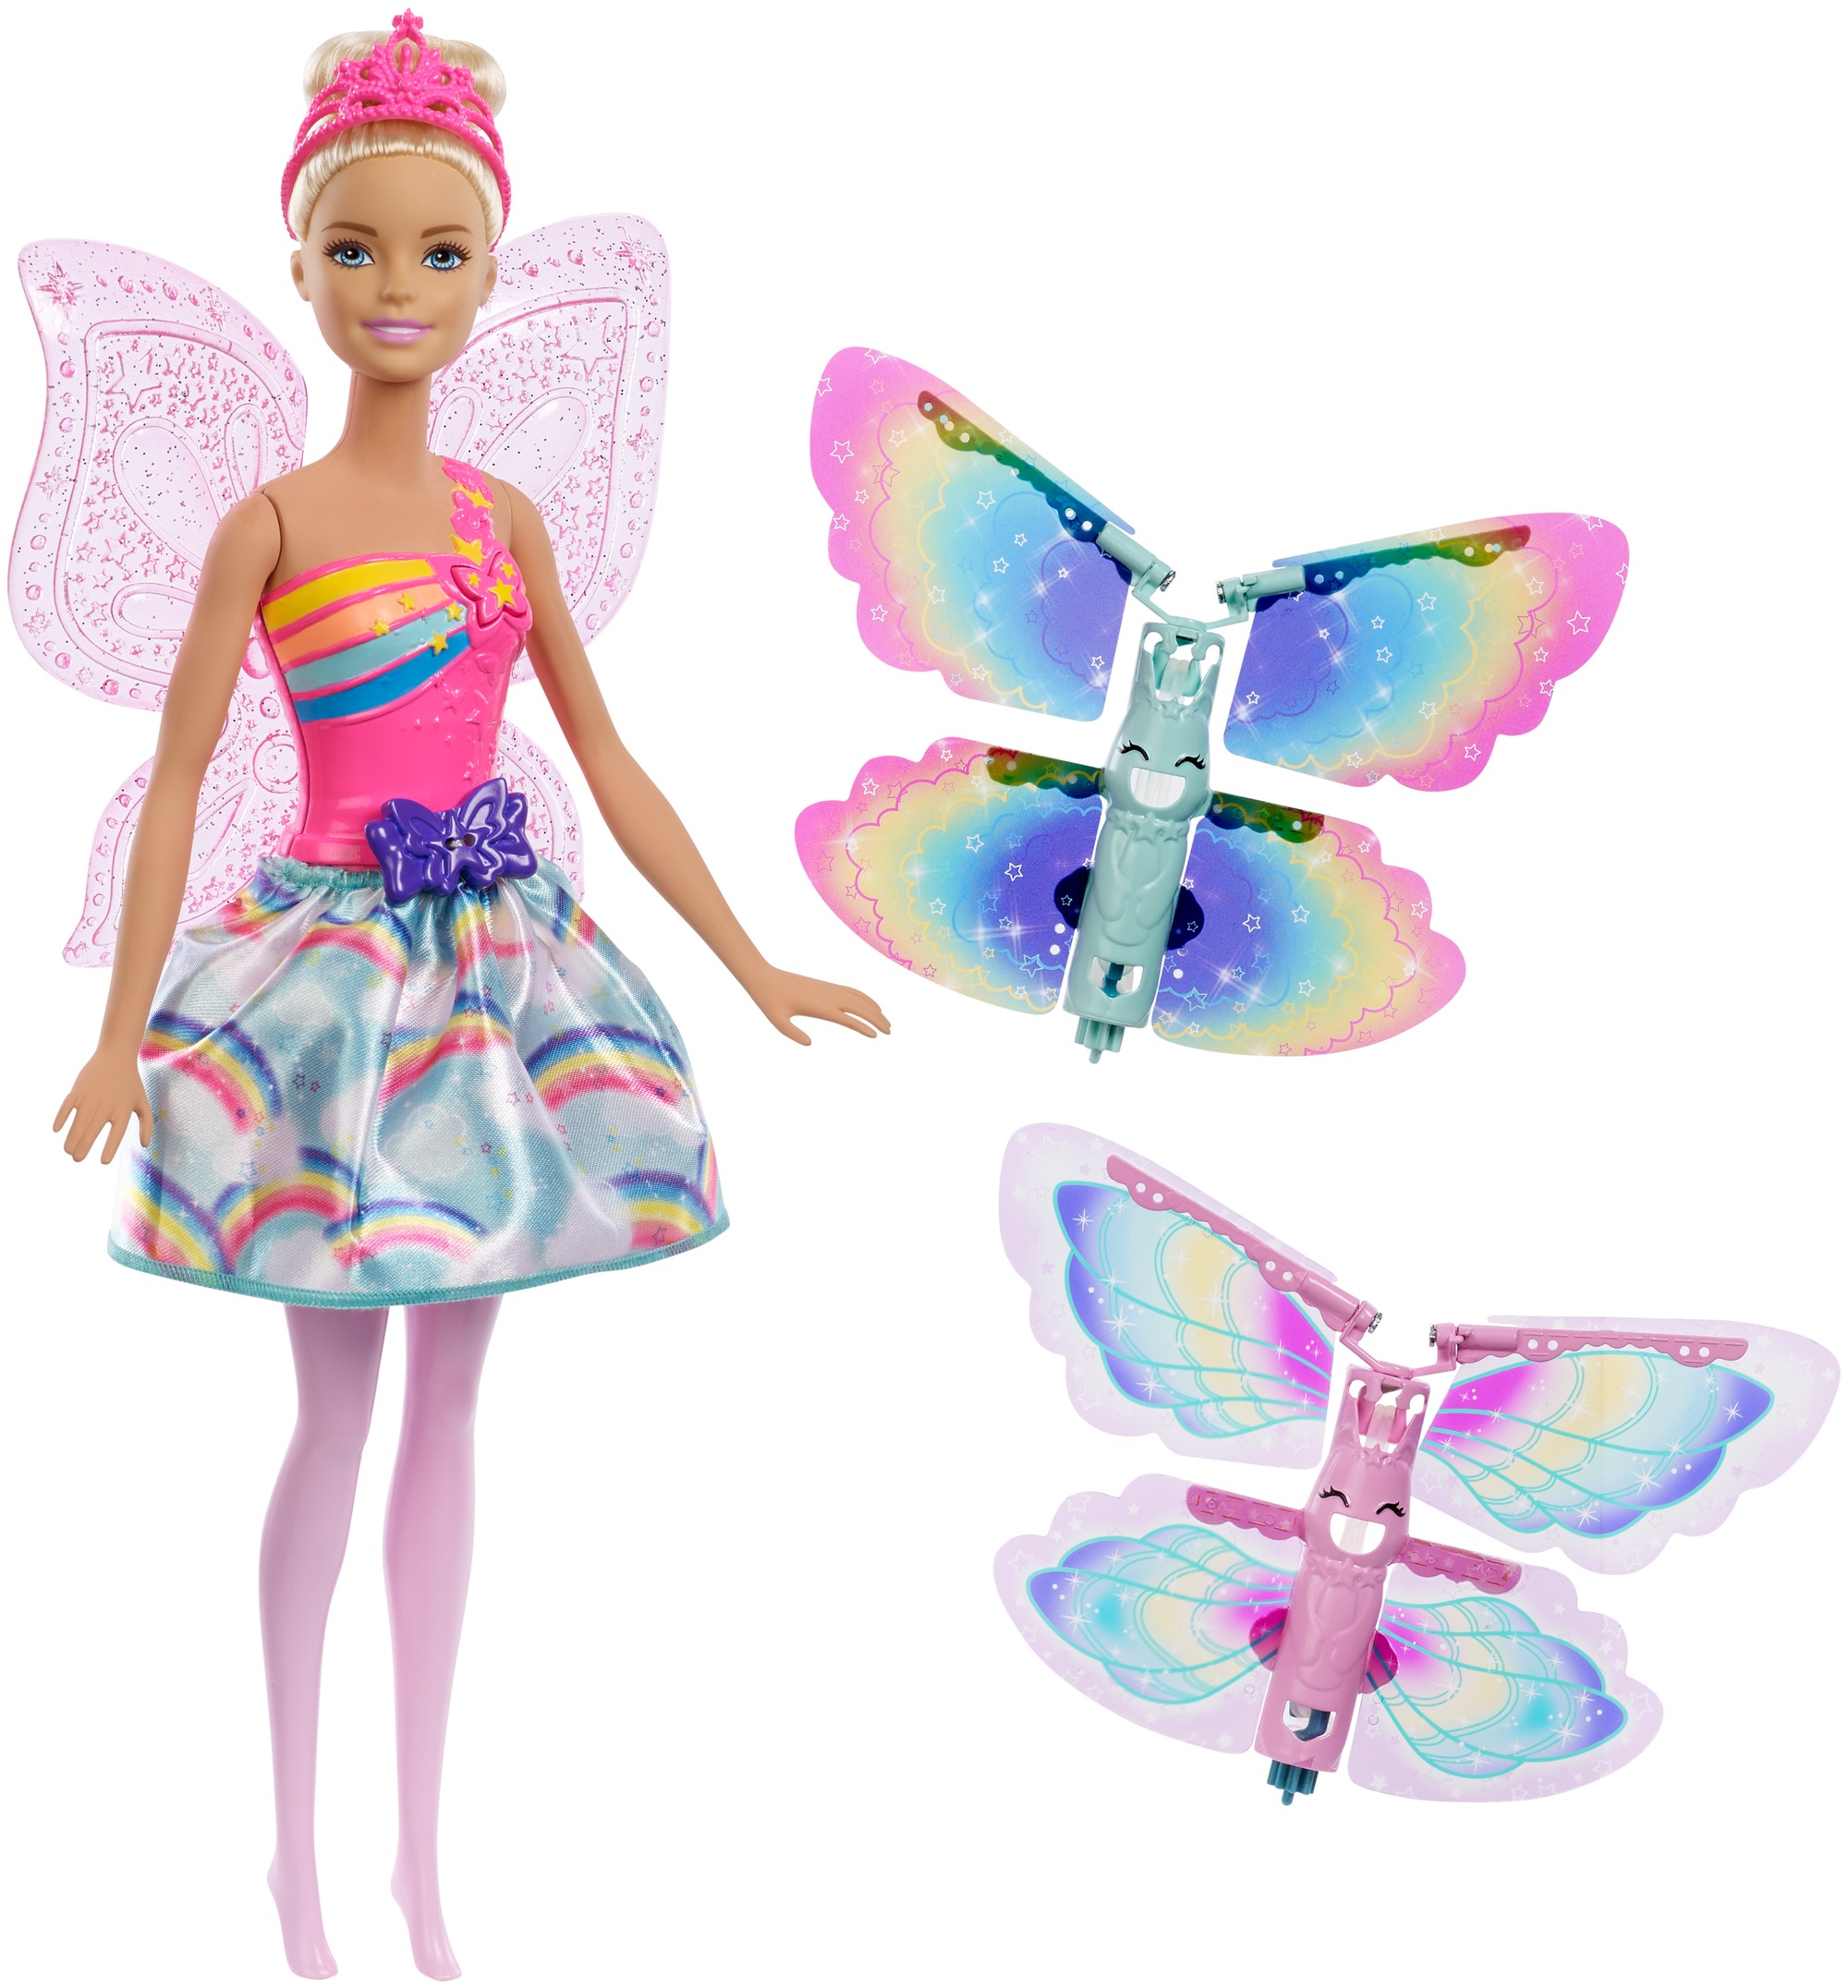 Barbie Dreamtopia Prinzessin blond Puppe Regenbogen Outfit FXT14 Neuware 